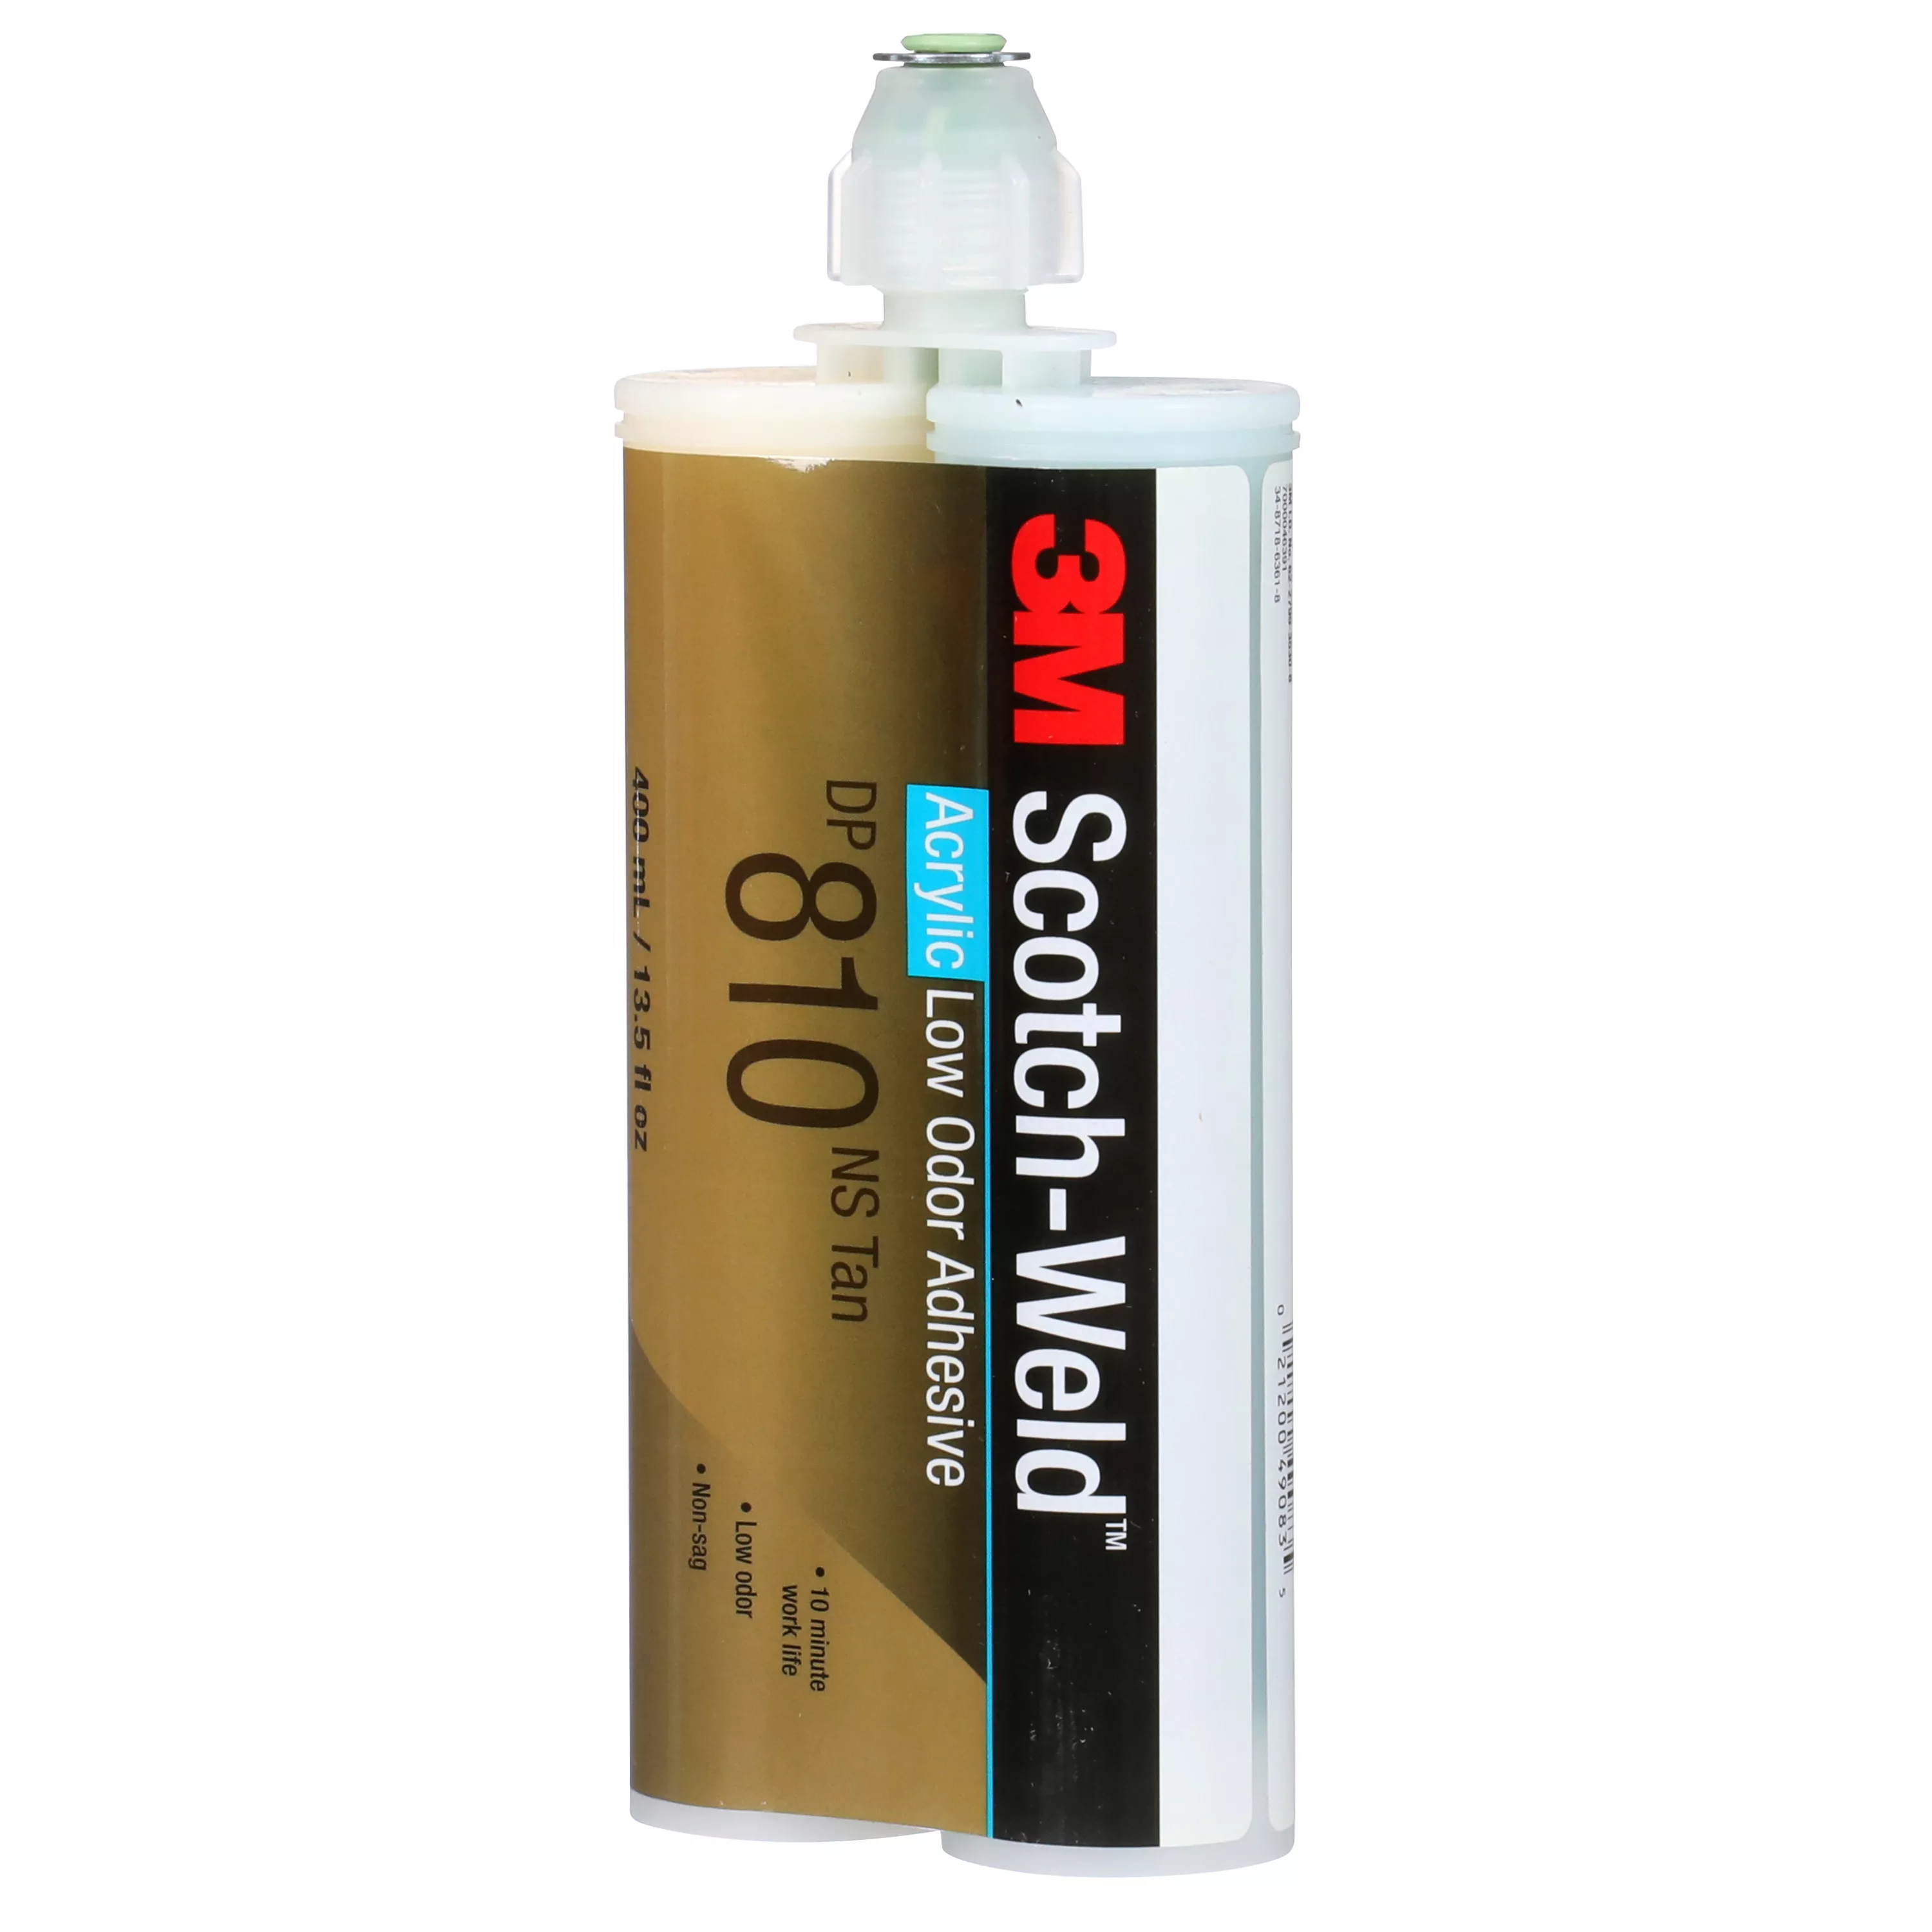 SKU 7100069366 | 3M™ Scotch-Weld™ Low Odor Acrylic Adhesive DP810NS